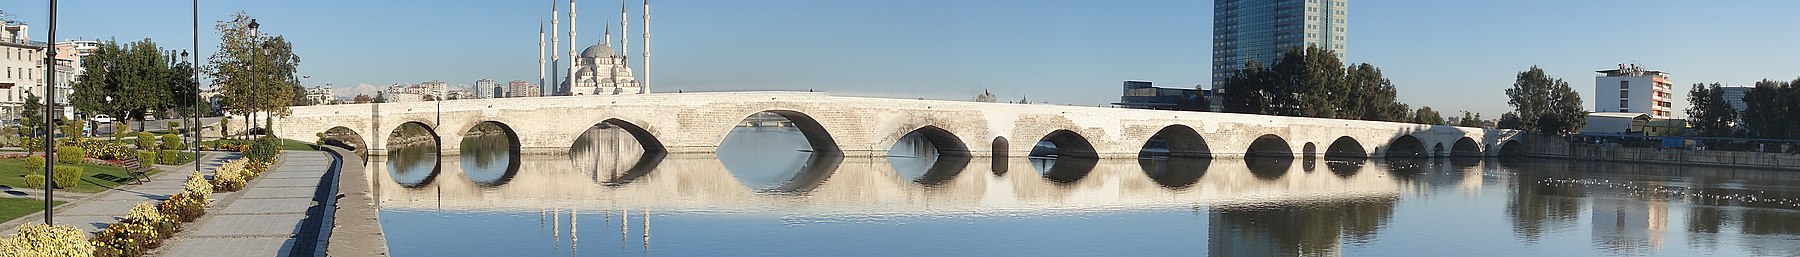 The Roman-era Stone Bridge spanning the Seyhan River